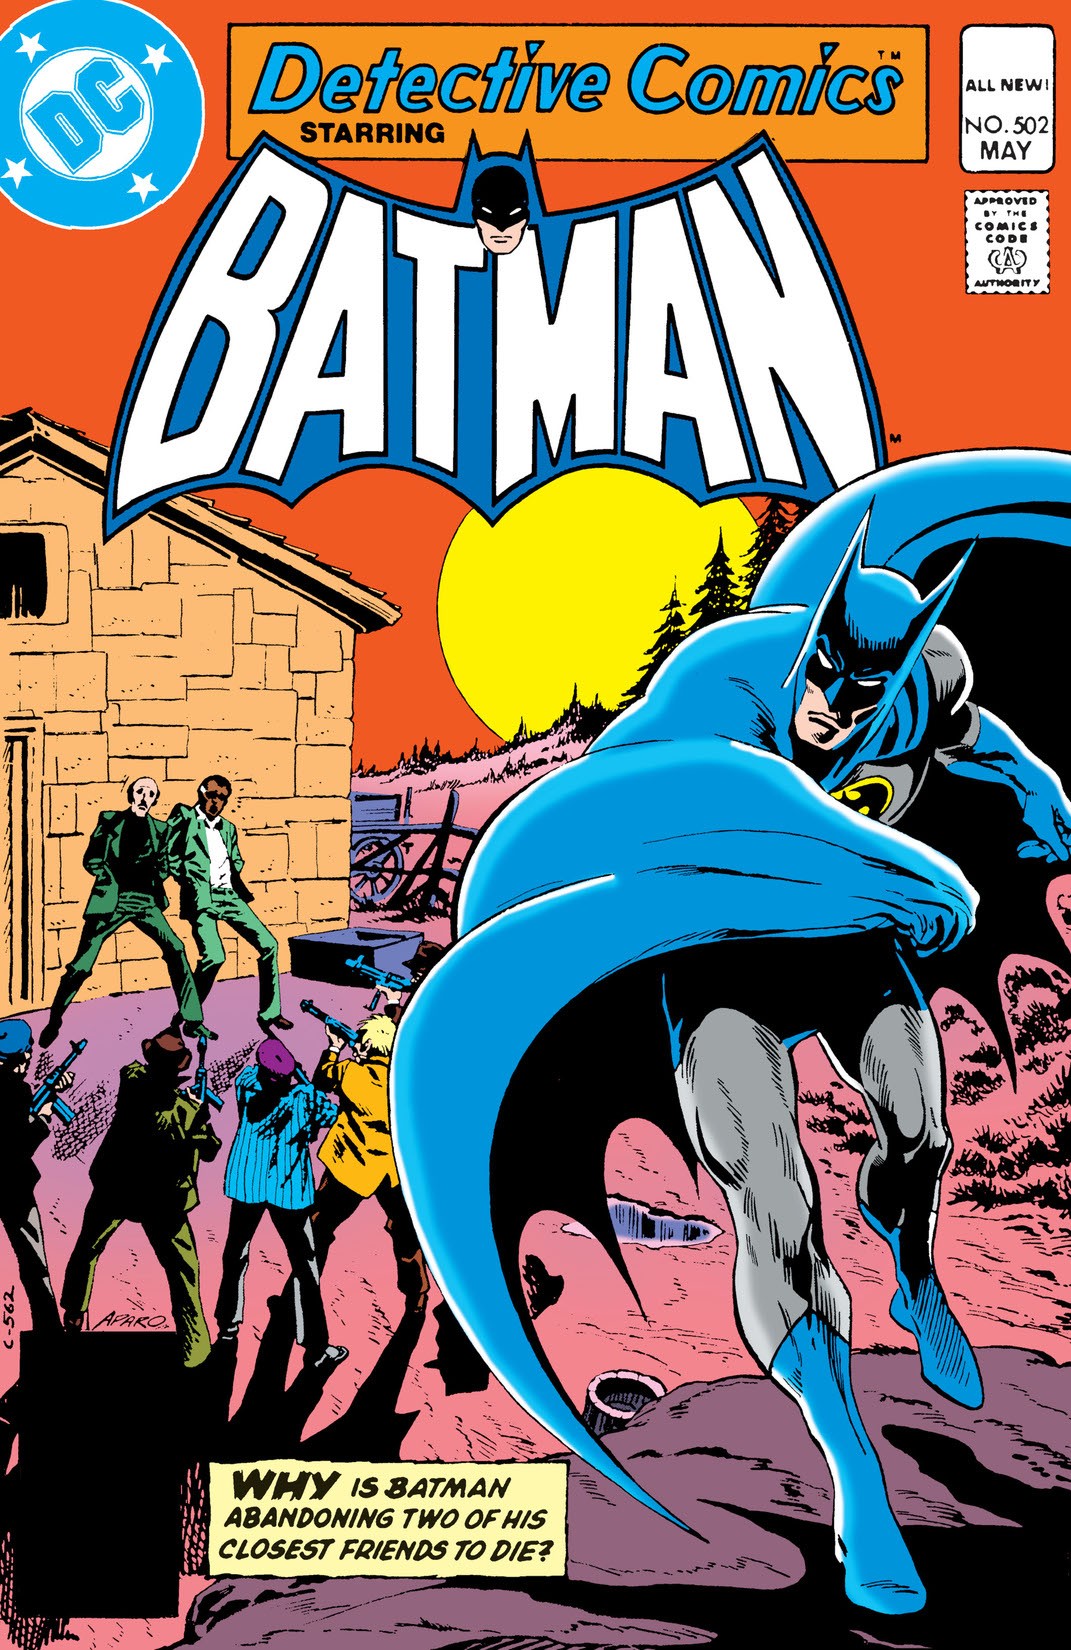 Detective Comics (1937-) #502 preview images